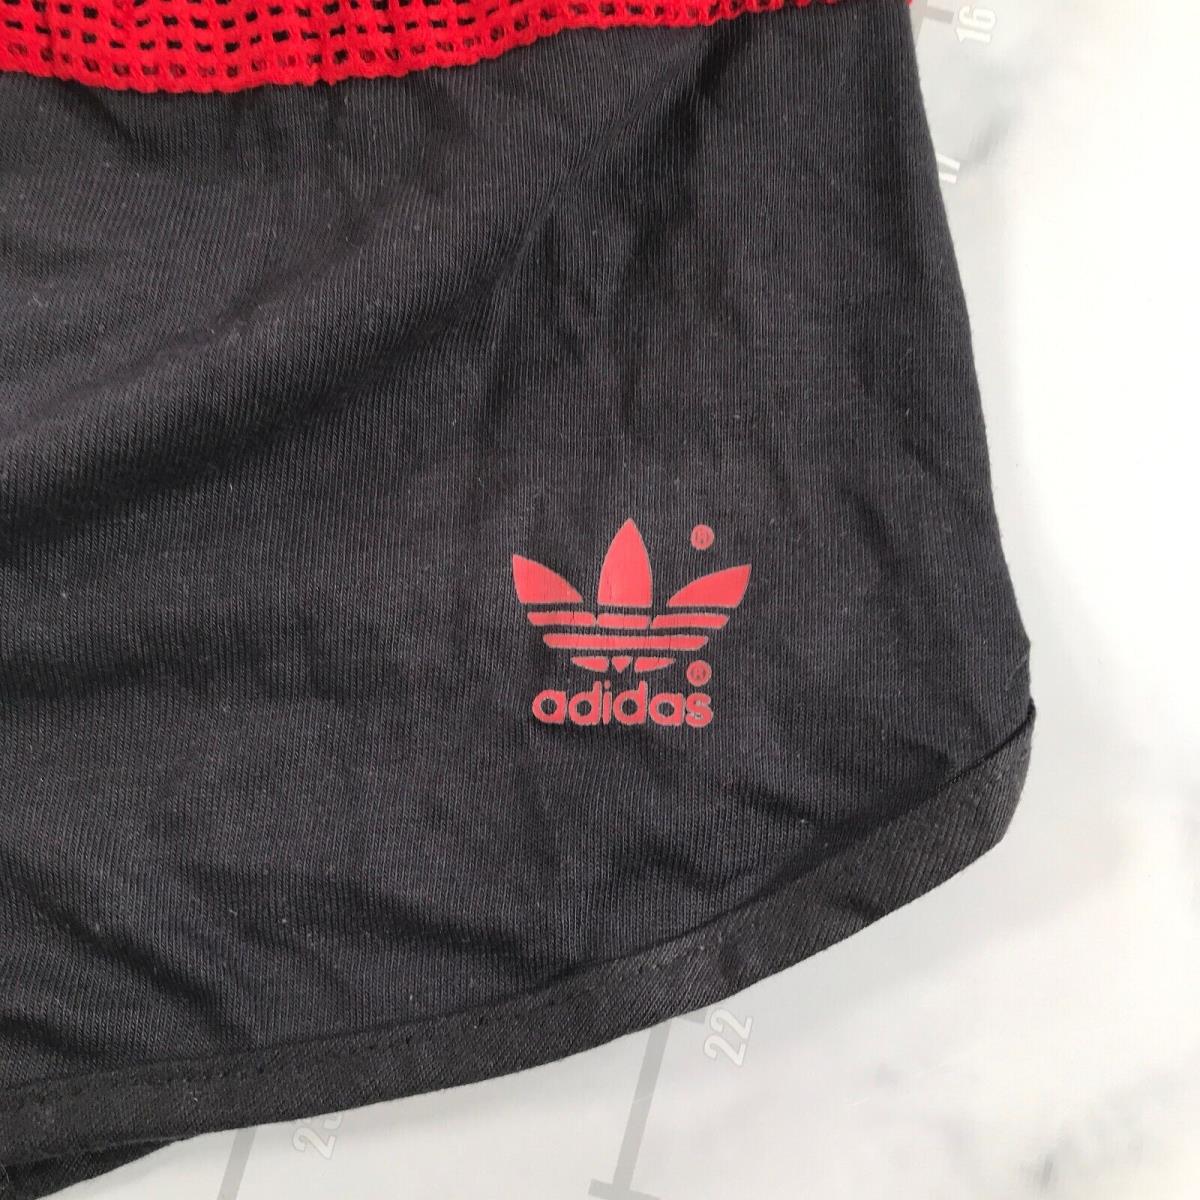 Vintage Adidas Running Shorts Mens S 28-30 Black Knit Thick Red Stripe Elastic